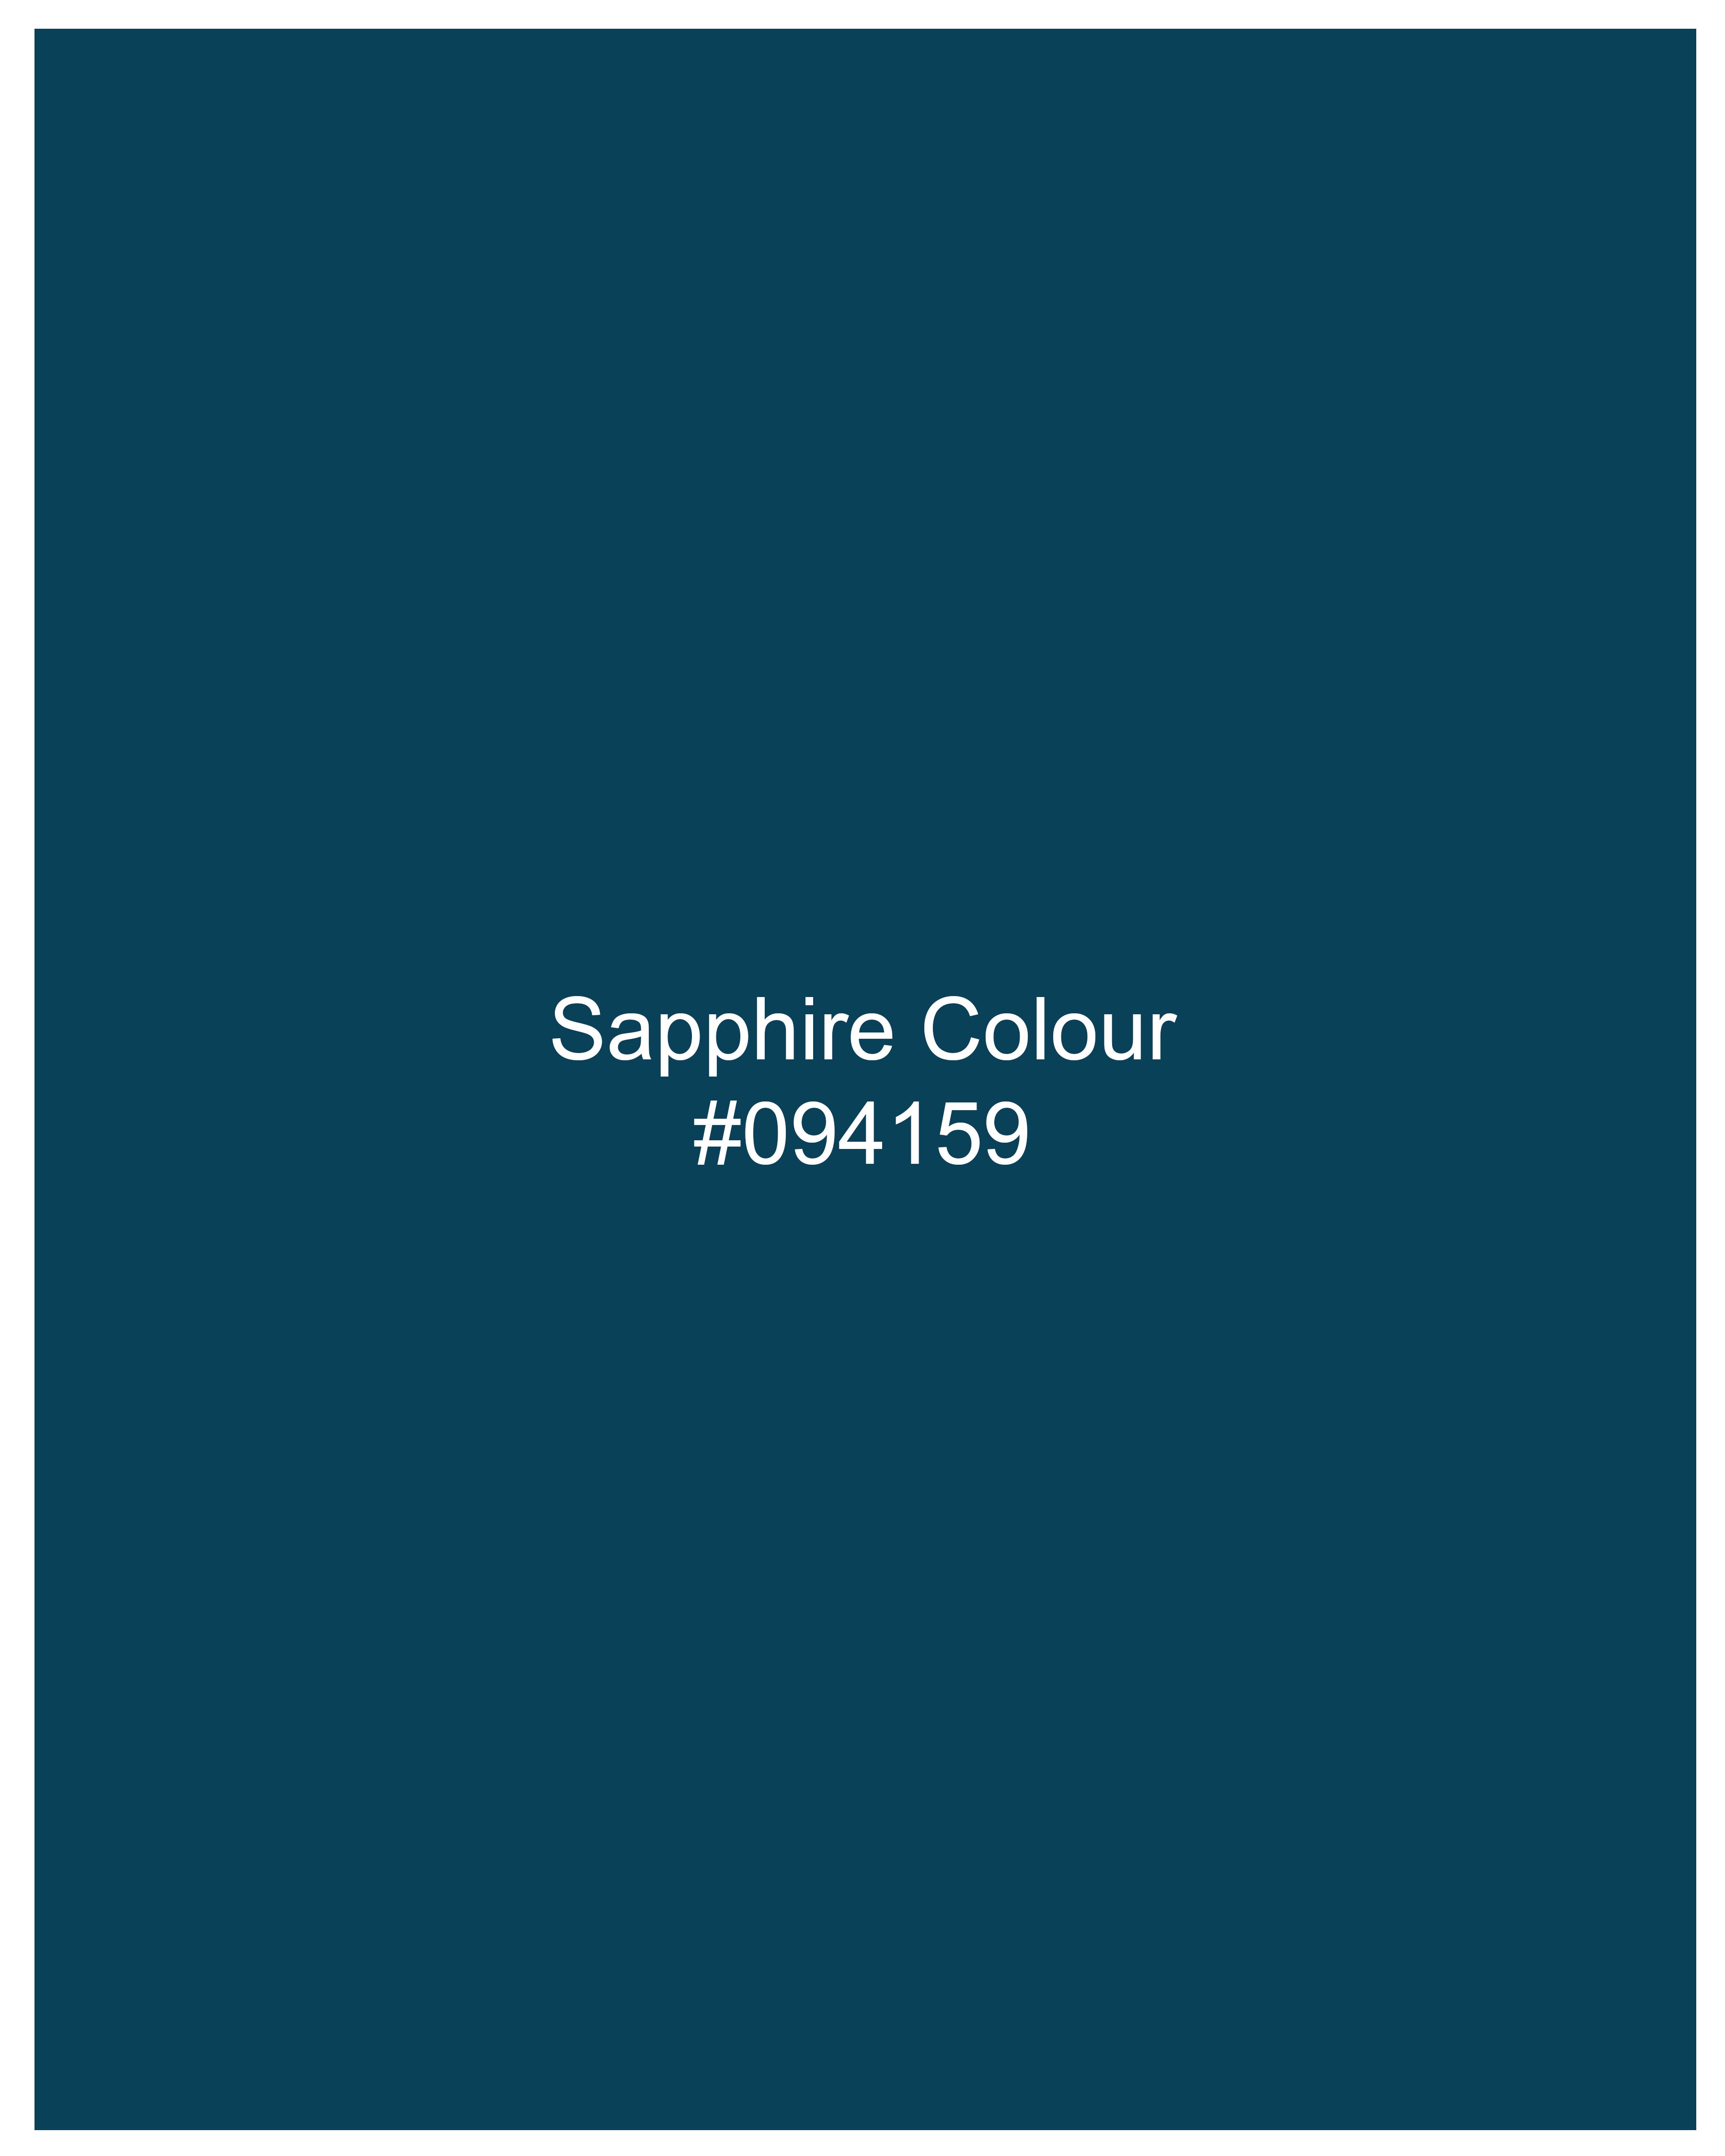 Sapphire Blue Subtle Striped Premium Cotton shirt 8457-38,8457-H-38,8457-39,8457-H-39,8457-40,8457-H-40,8457-42,8457-H-42,8457-44,8457-H-44,8457-46,8457-H-46,8457-48,8457-H-48,8457-50,8457-H-50,8457-52,8457-H-52